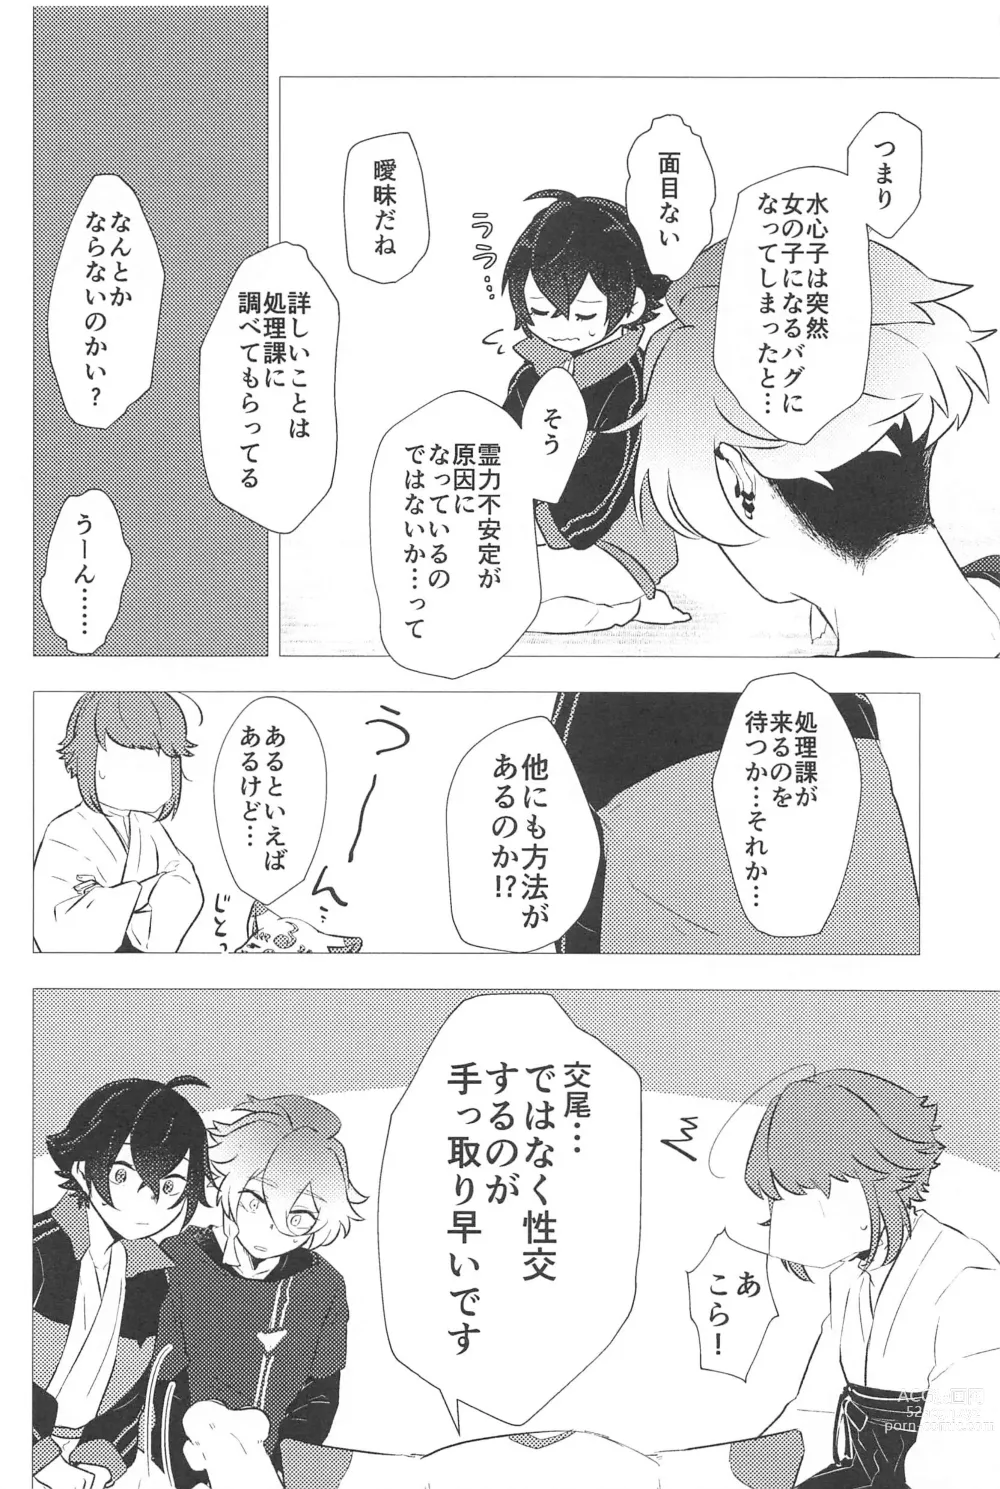 Page 15 of doujinshi Konnanotte Nai!